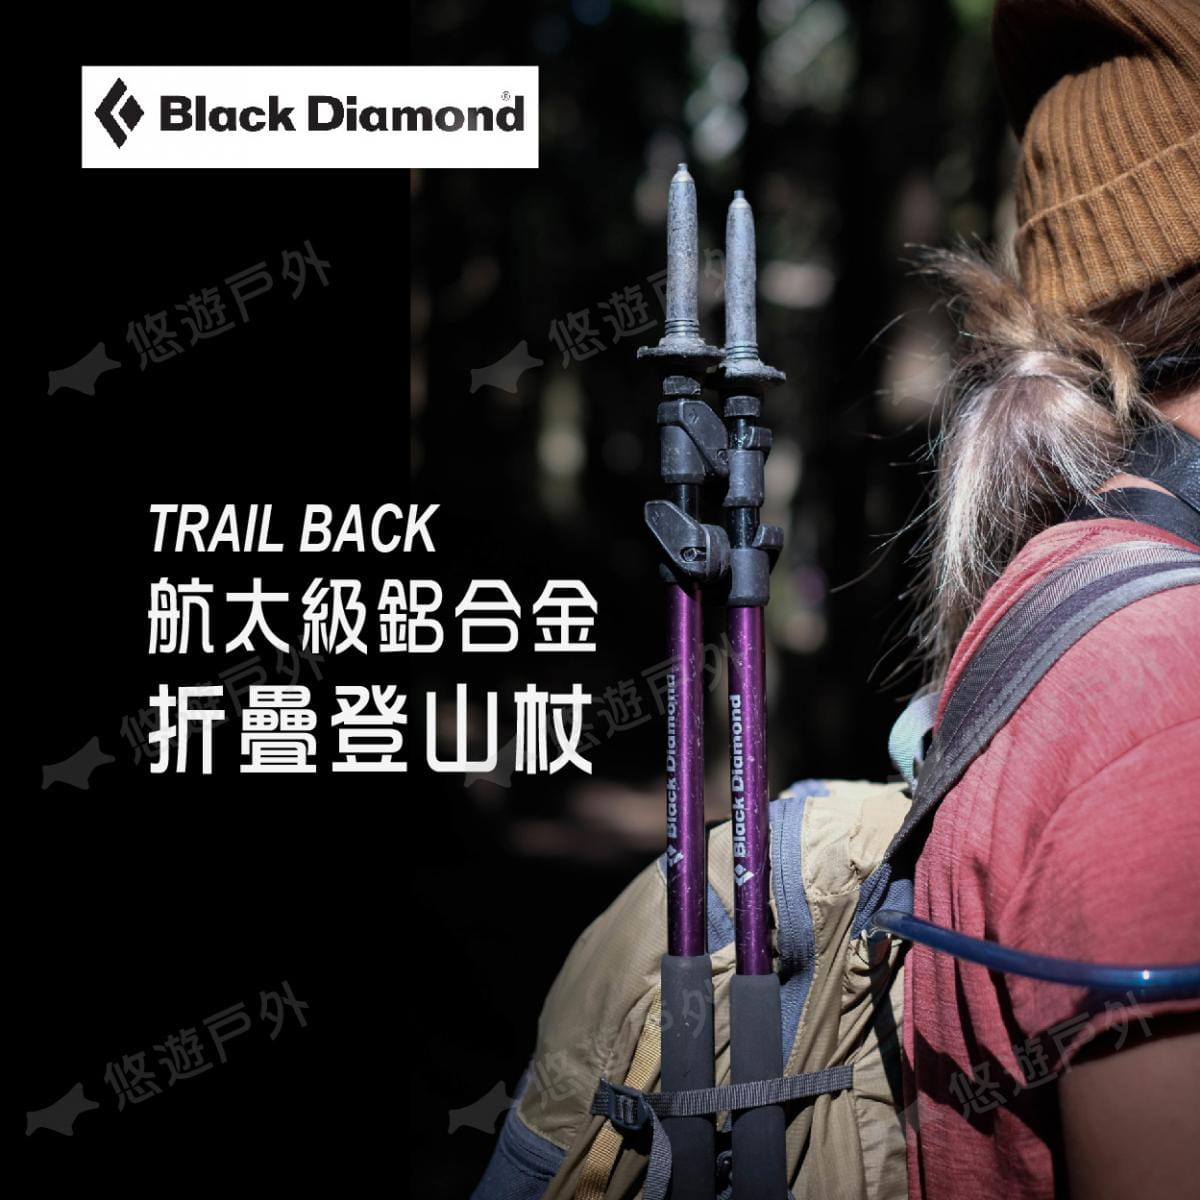 【Black Diamond】TRAIL BACK 航太級鋁合金折疊登山杖 112227 快扣設計 1